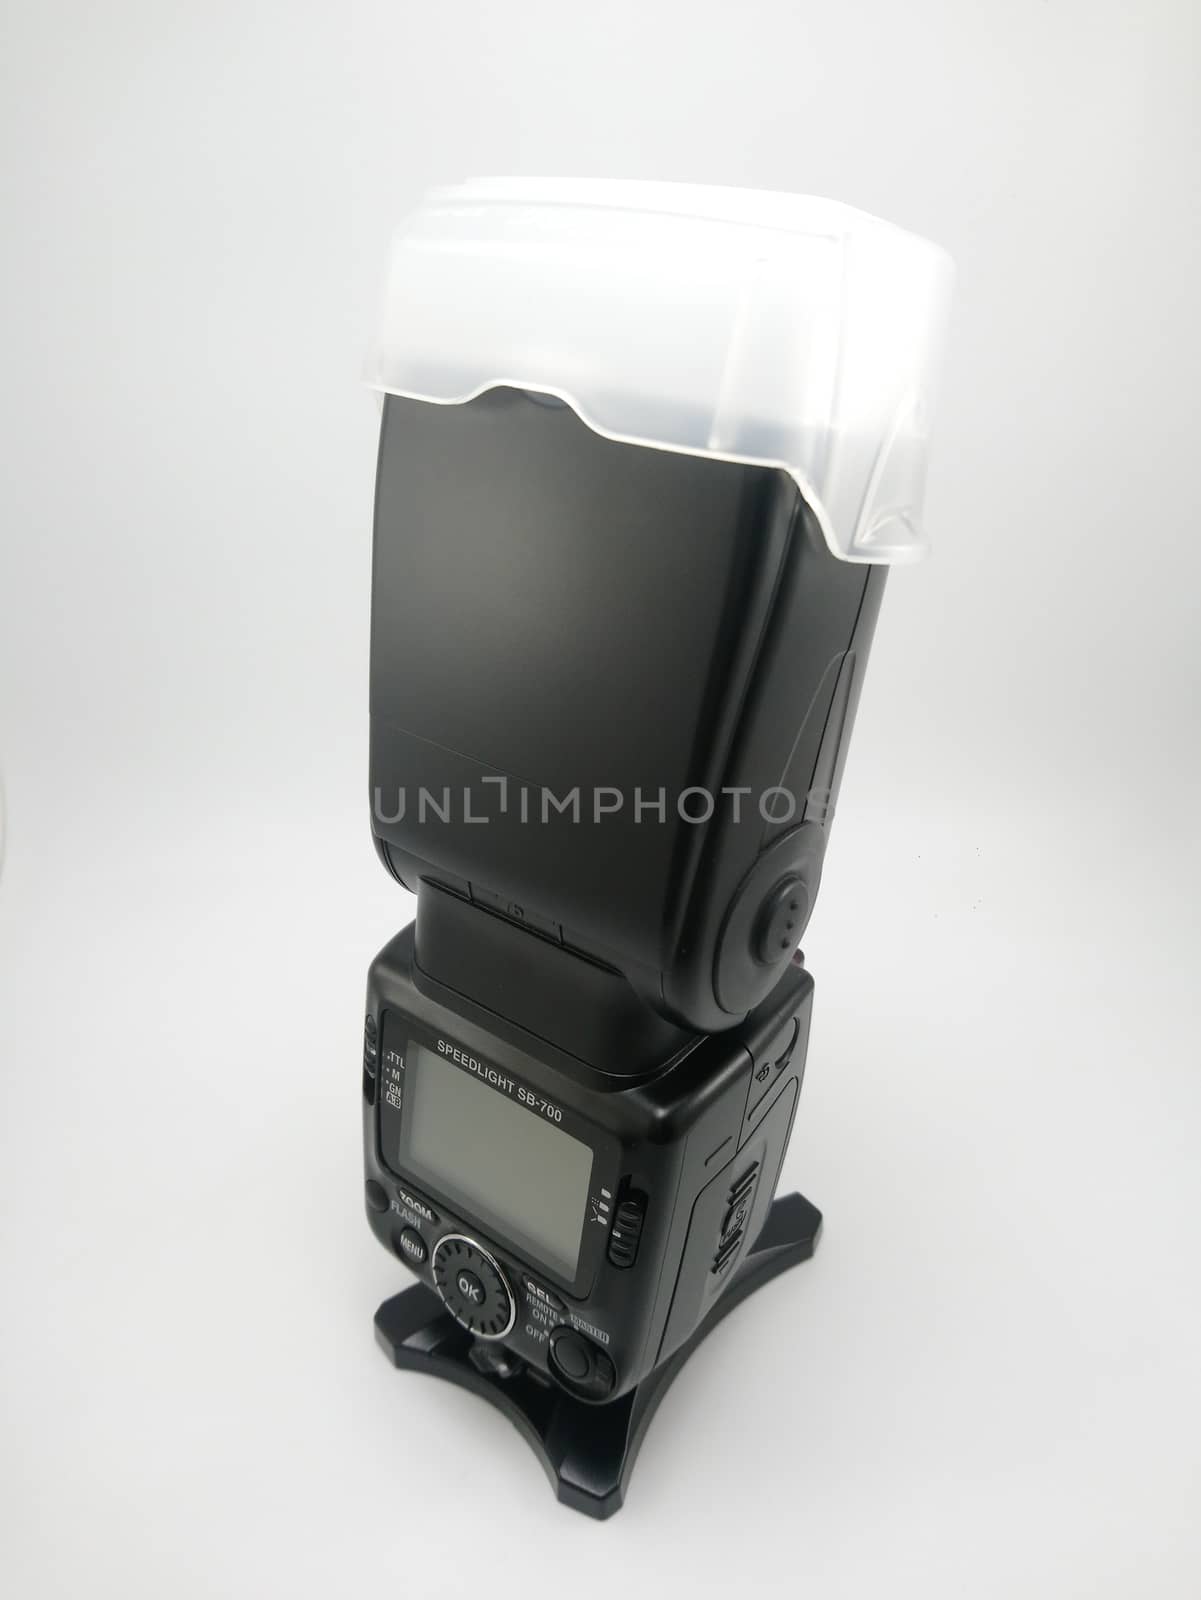 Nikon sb 700 flash speedlight with diffuser cap in Manila, Phili by imwaltersy